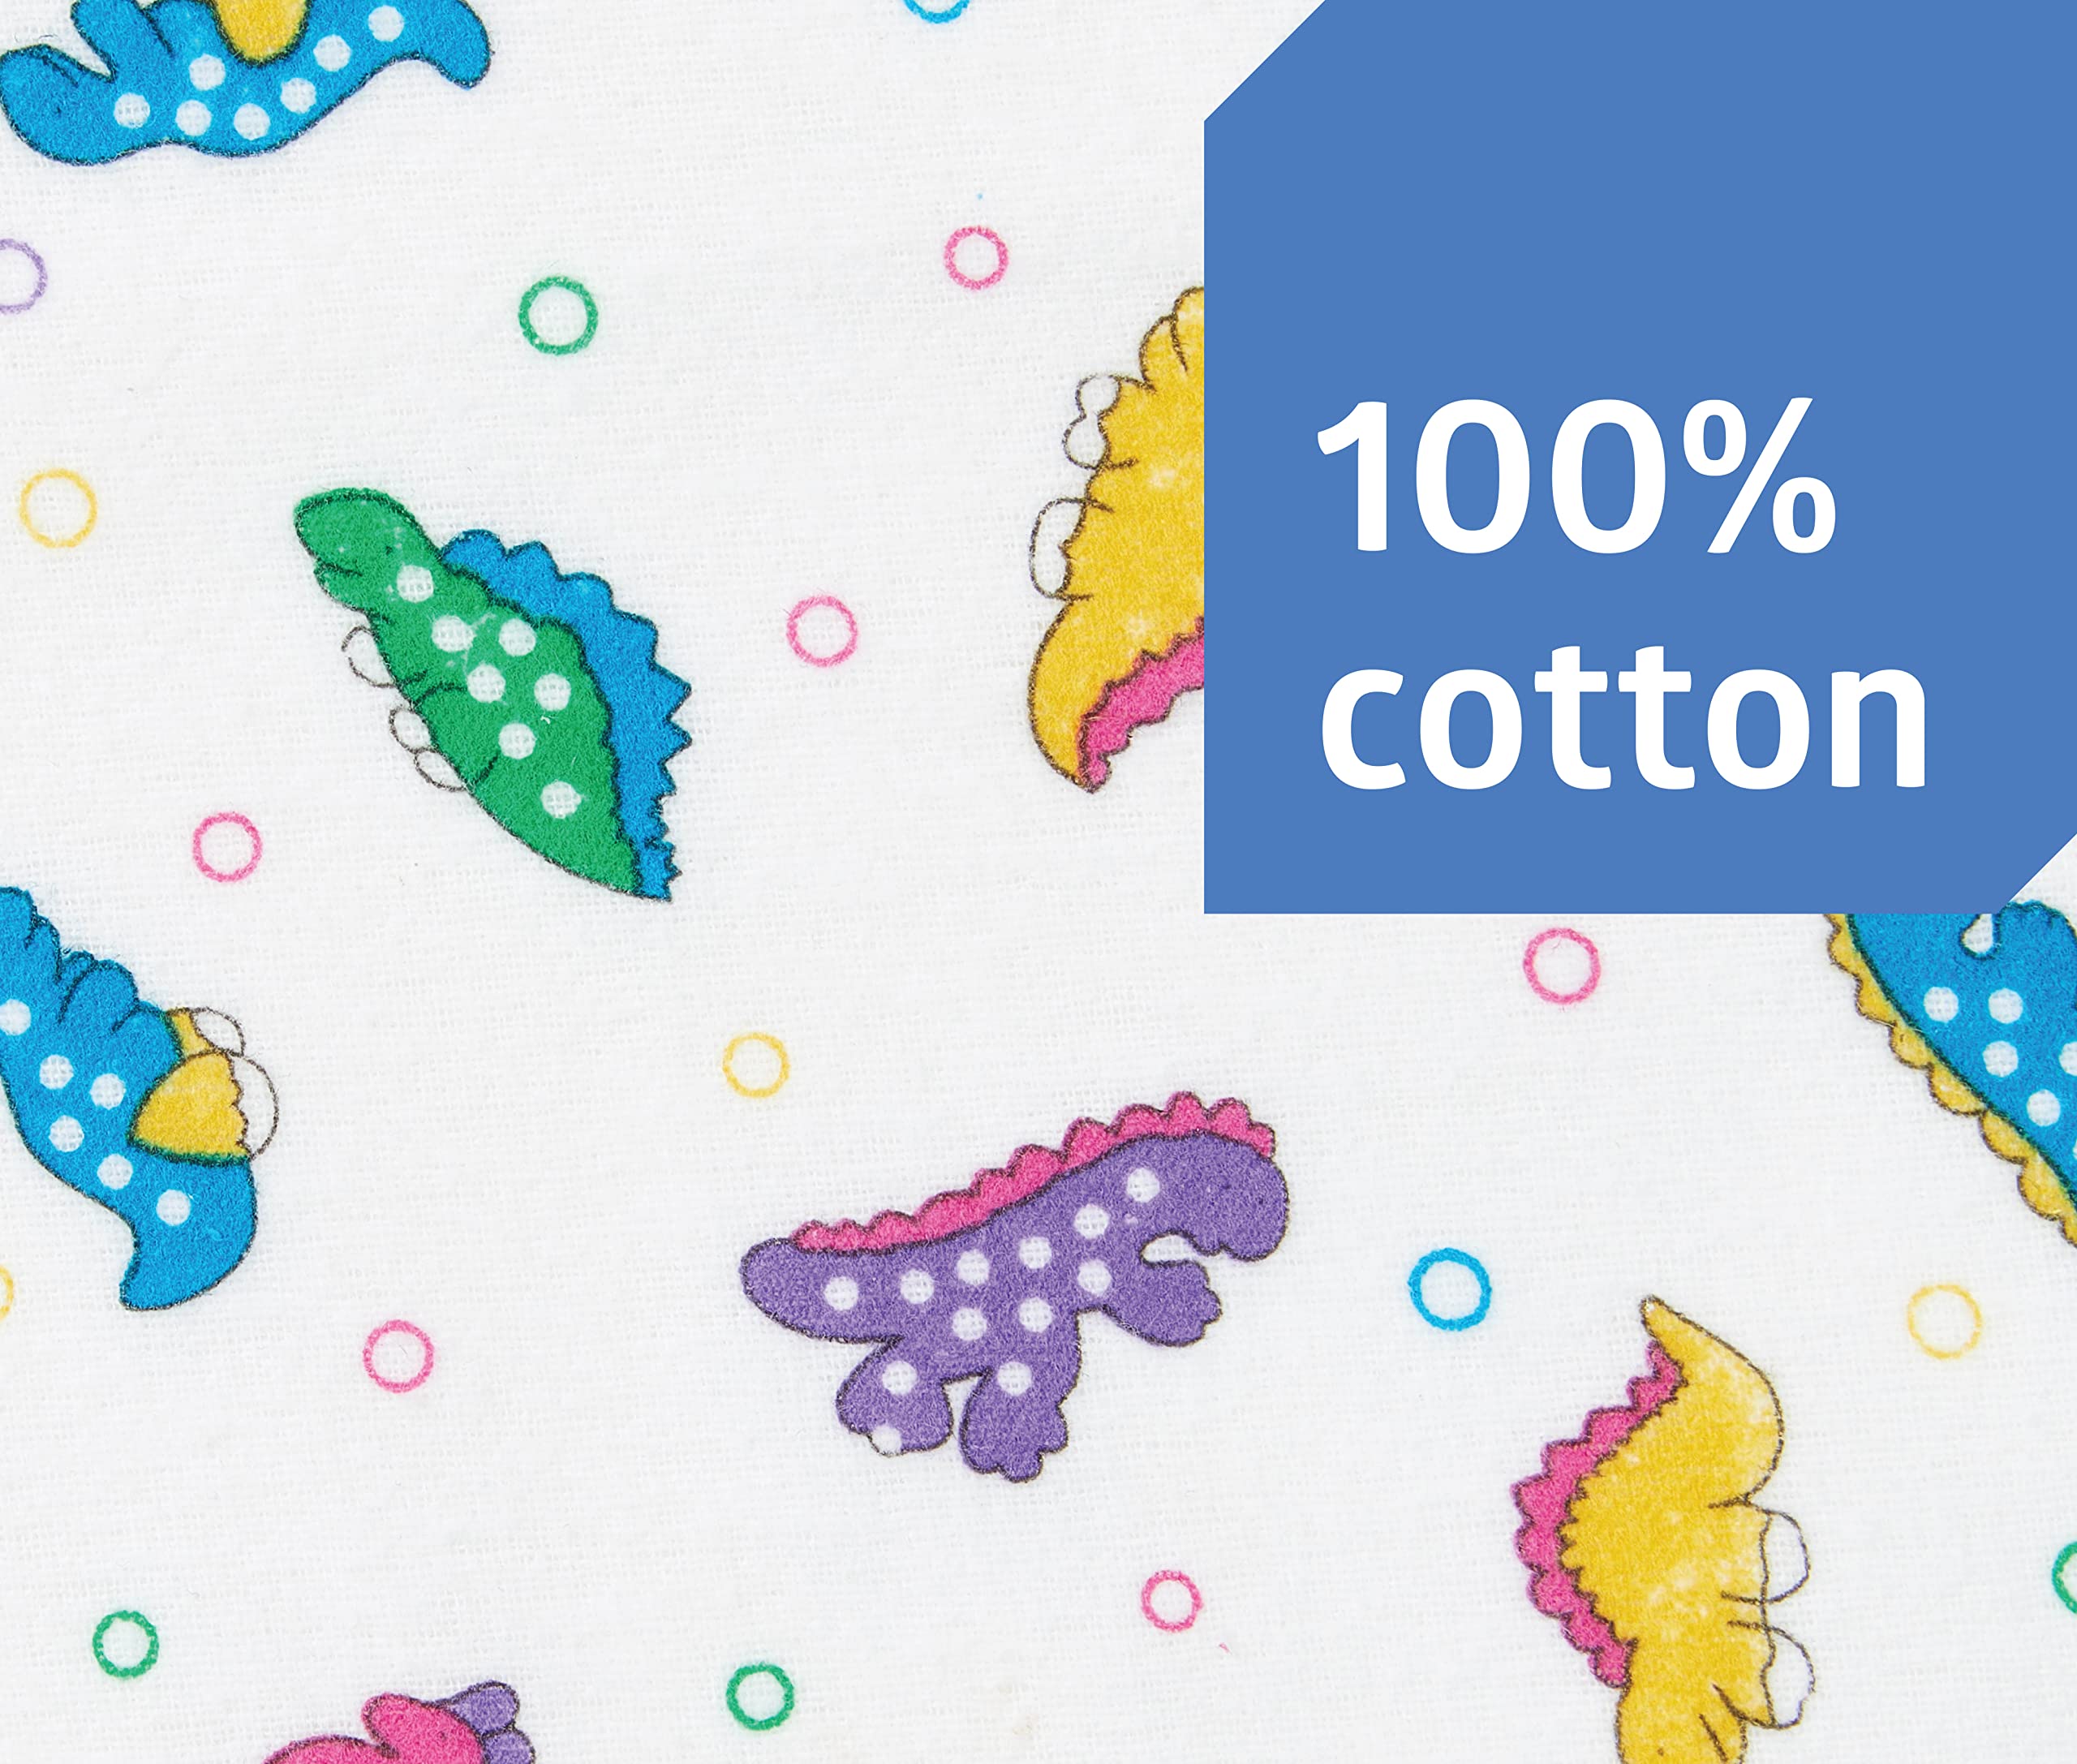 Medline Dinosaur Print Baby Blanket, Classic Design,100% Cotton, Soft, Cuddly, Swaddling, 30